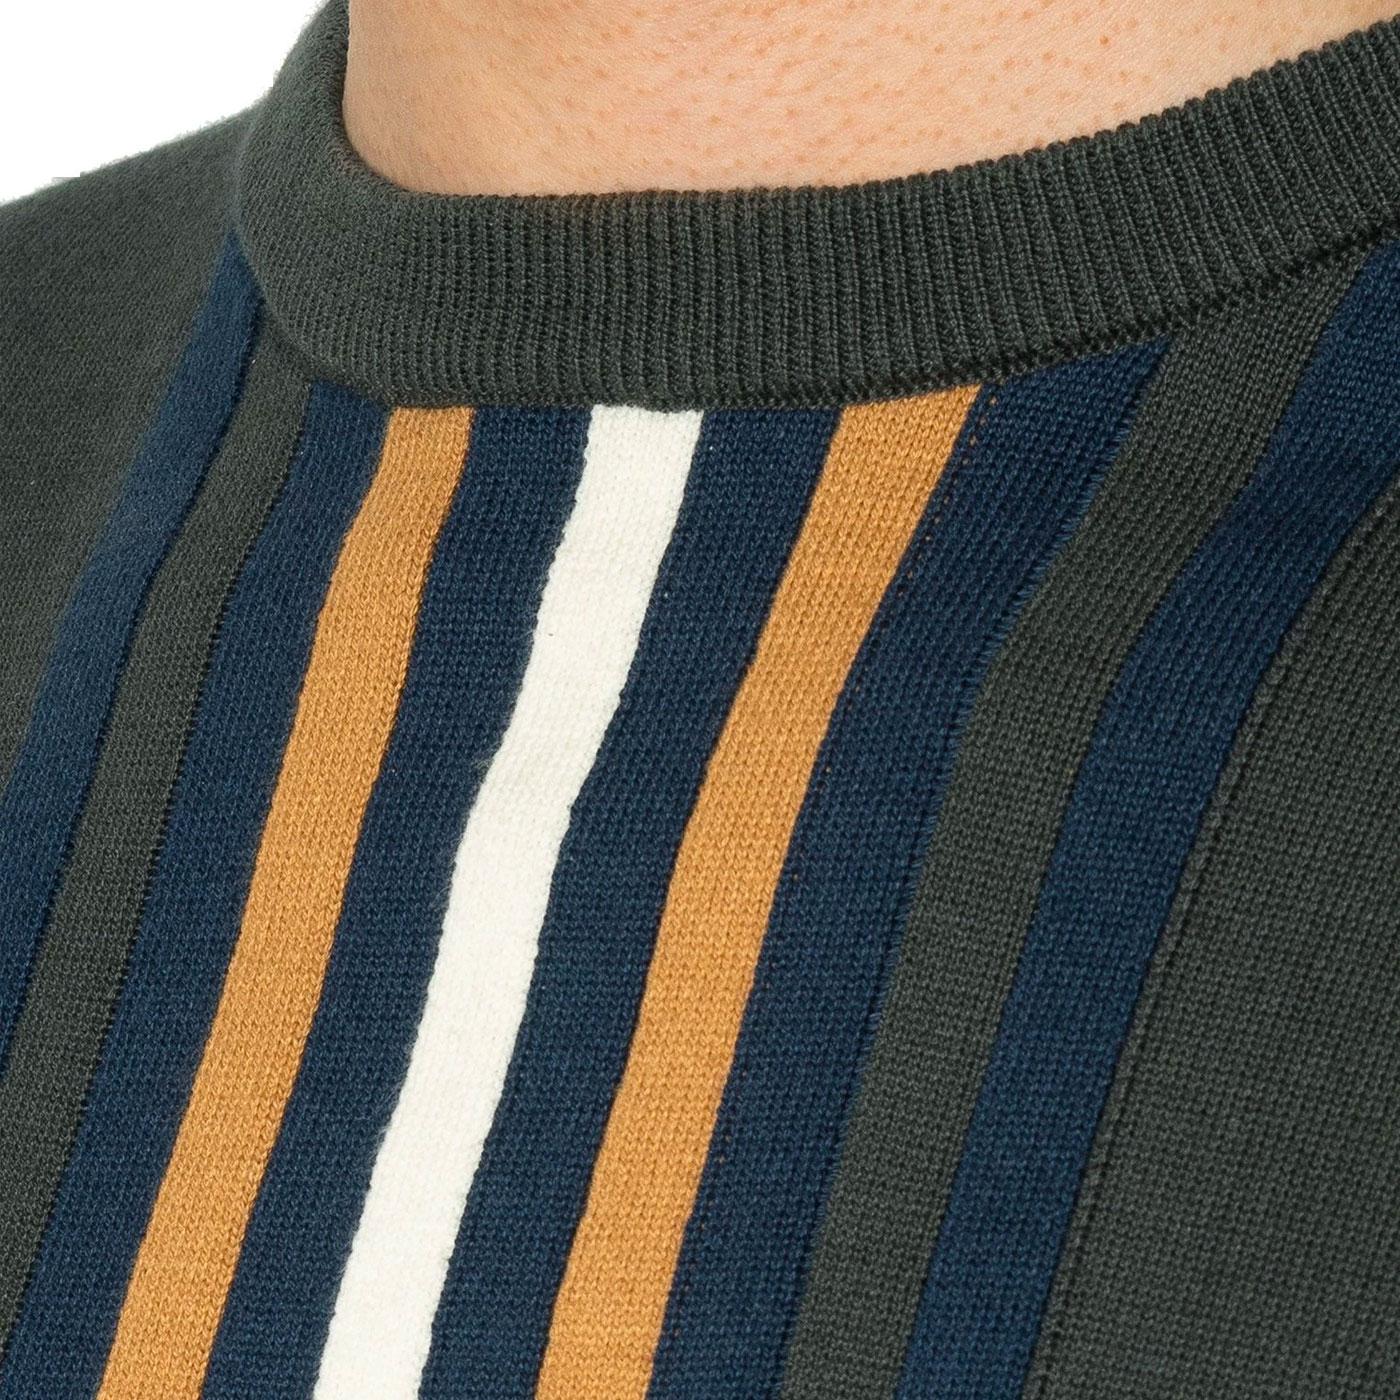 MERC Woburn Retro Men's Stripe Front Knit Jumper